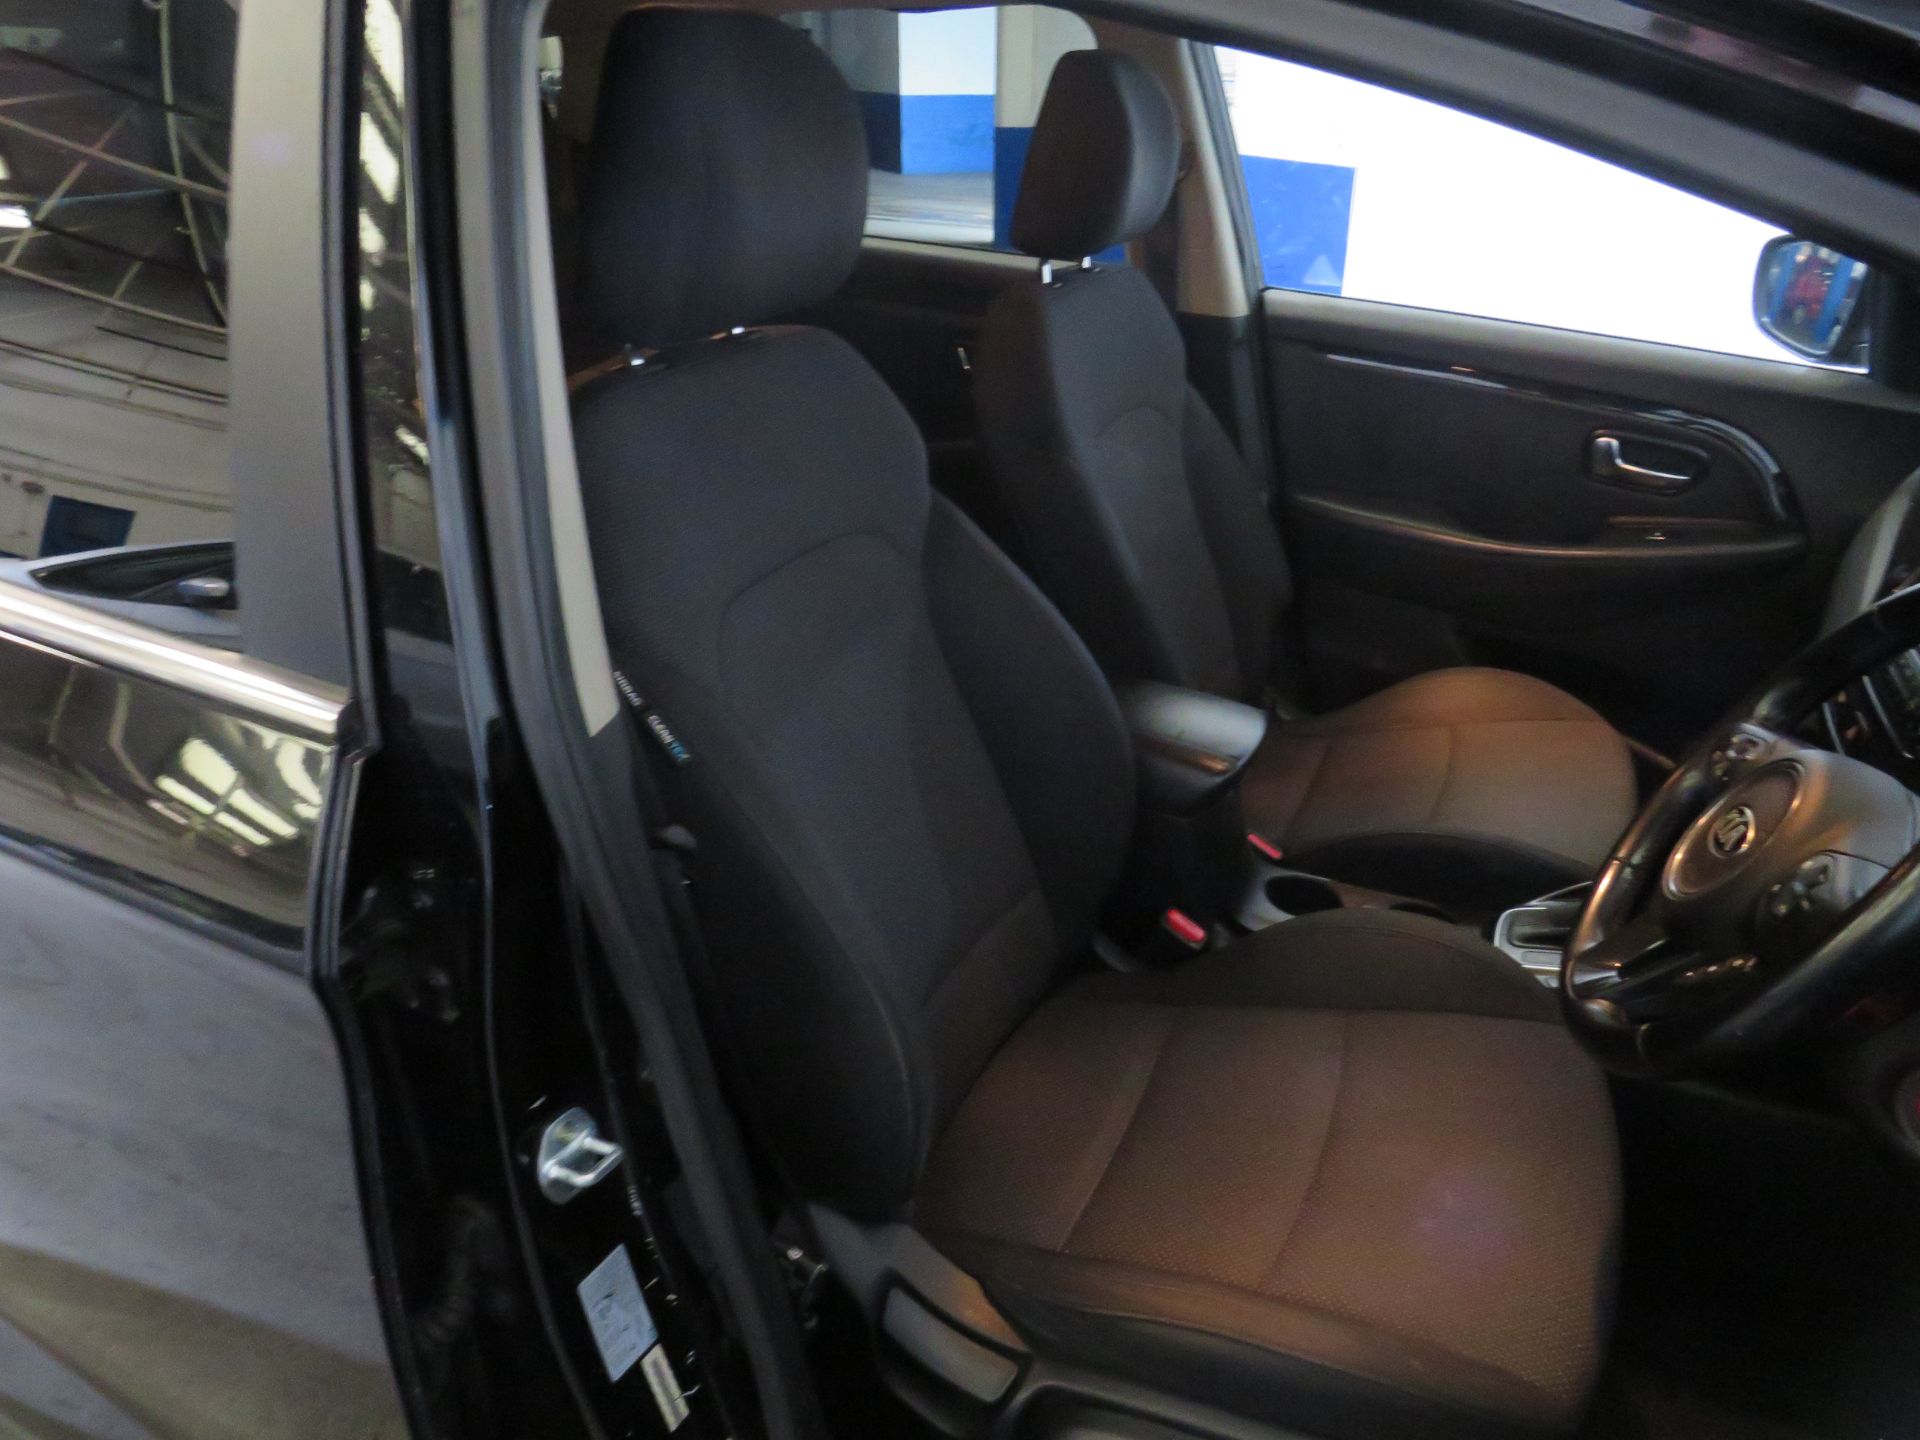 2014 Kia Carens 2 CRDI Auto - 1685cc - Image 7 of 9